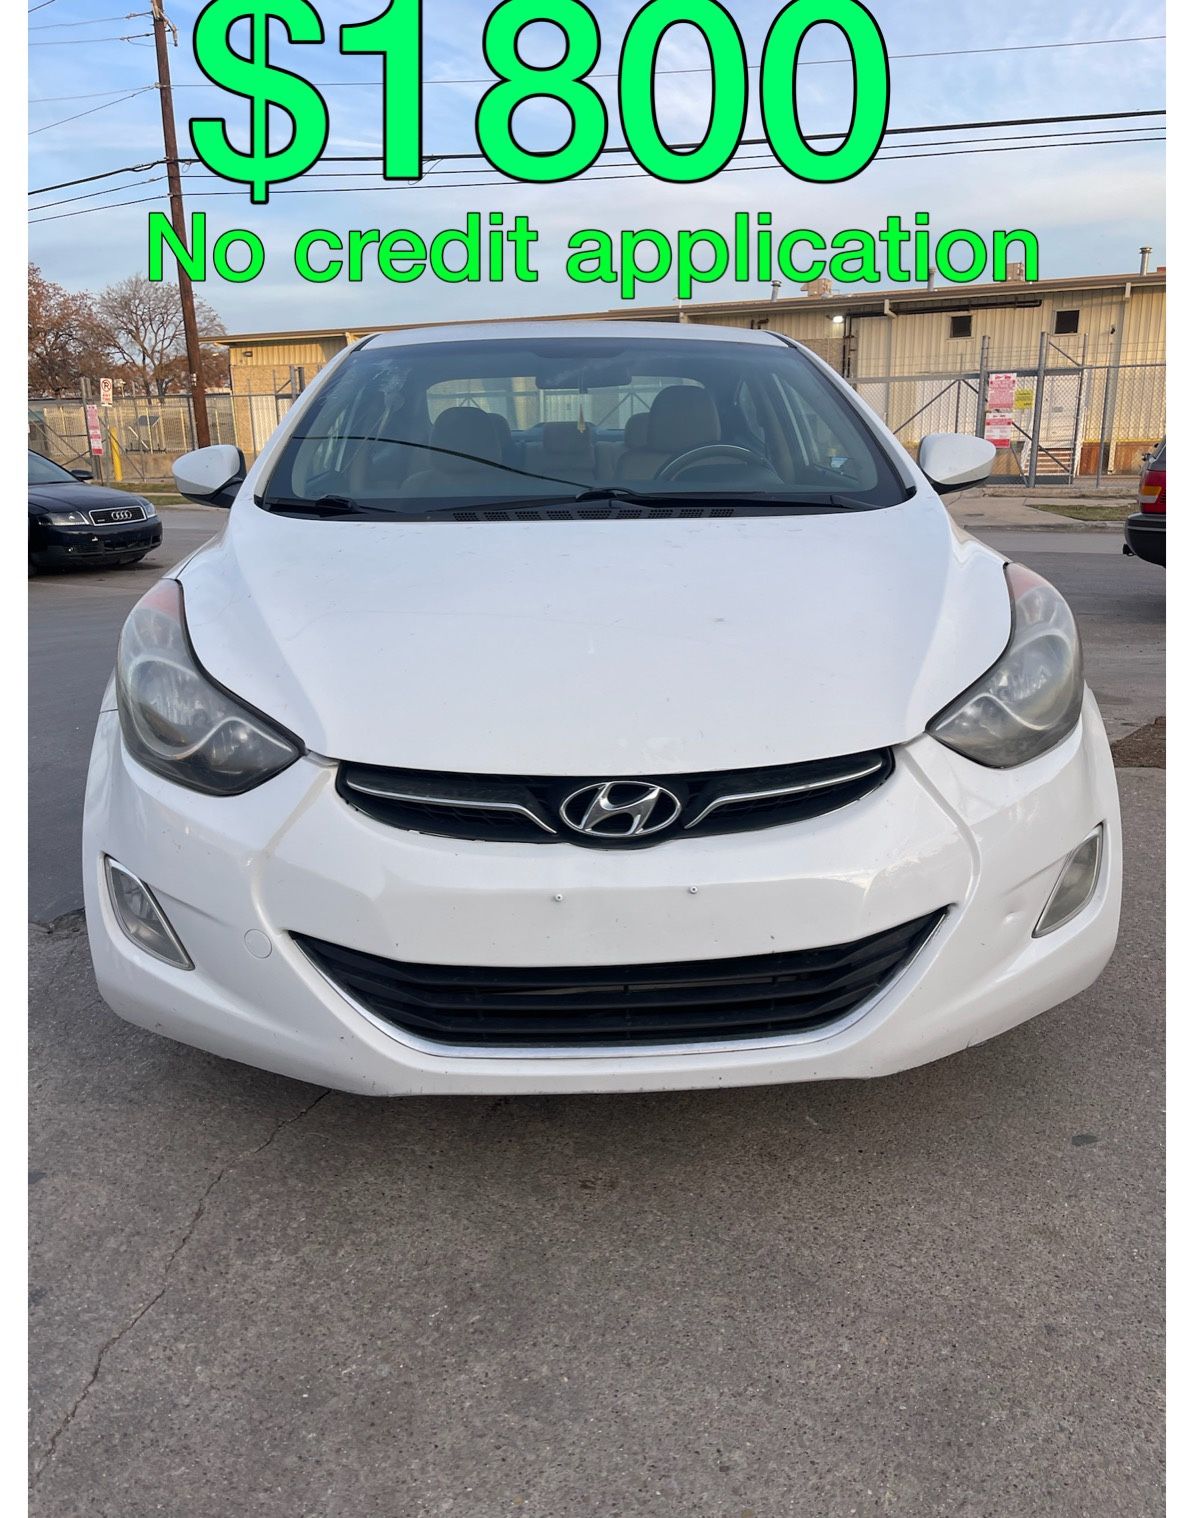 2013 Hyundai Alantra No Credit Application